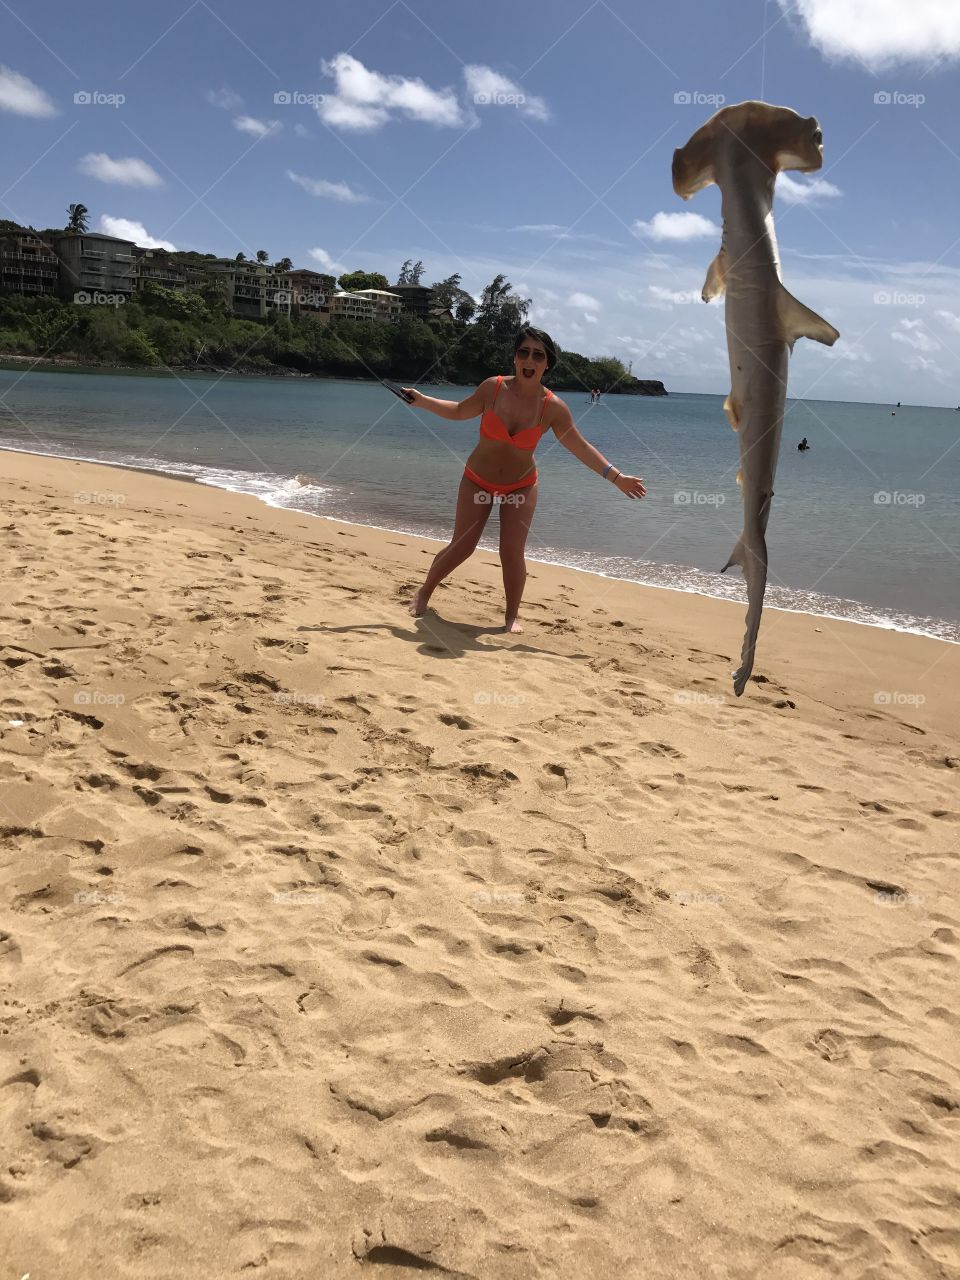 Scared woman on sandy beach near fish